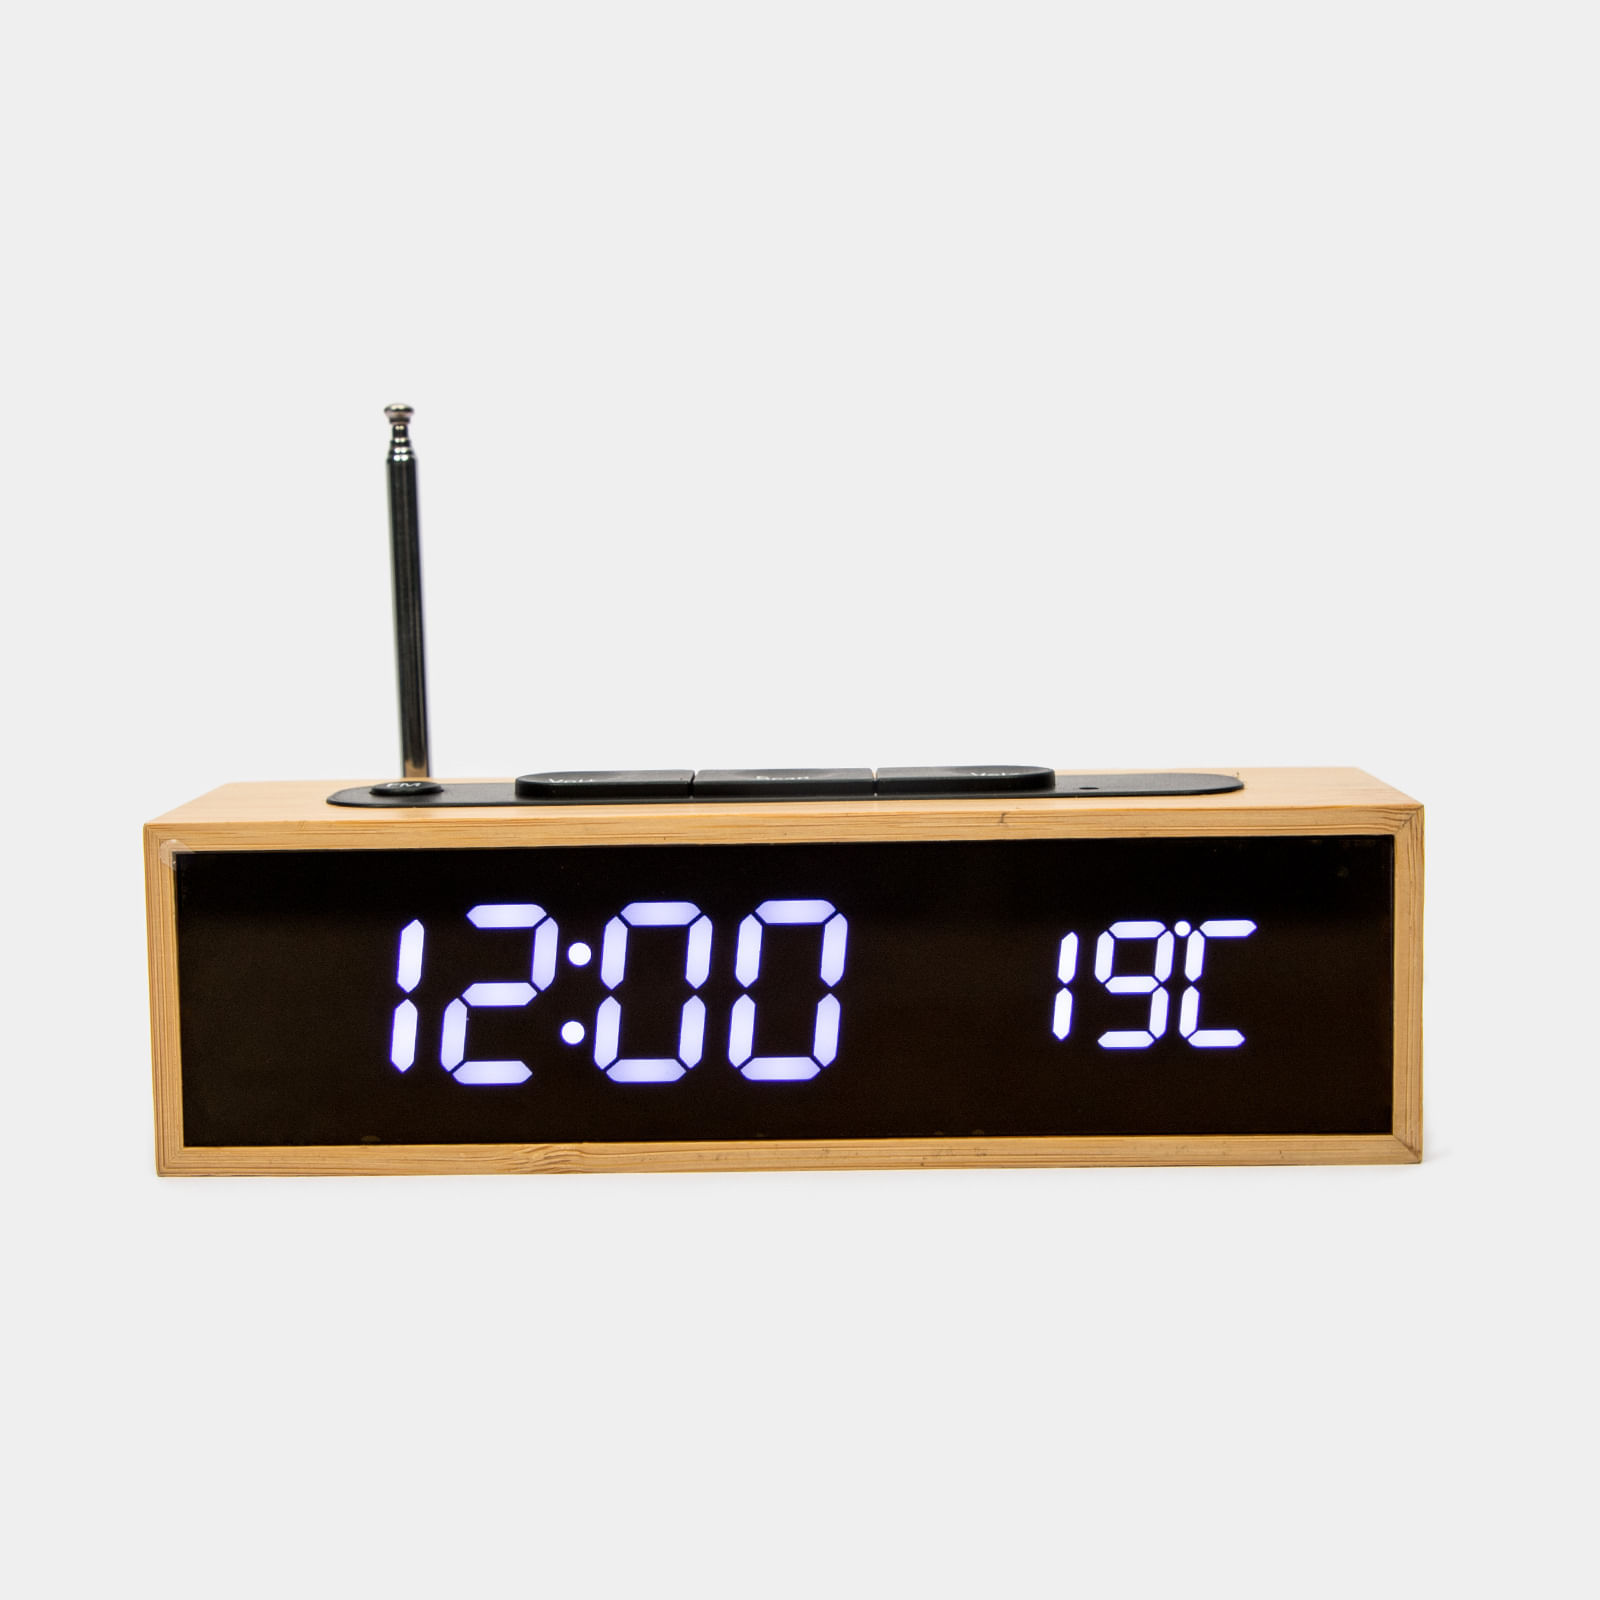 Reloj De Mesa Digital Con Alarma